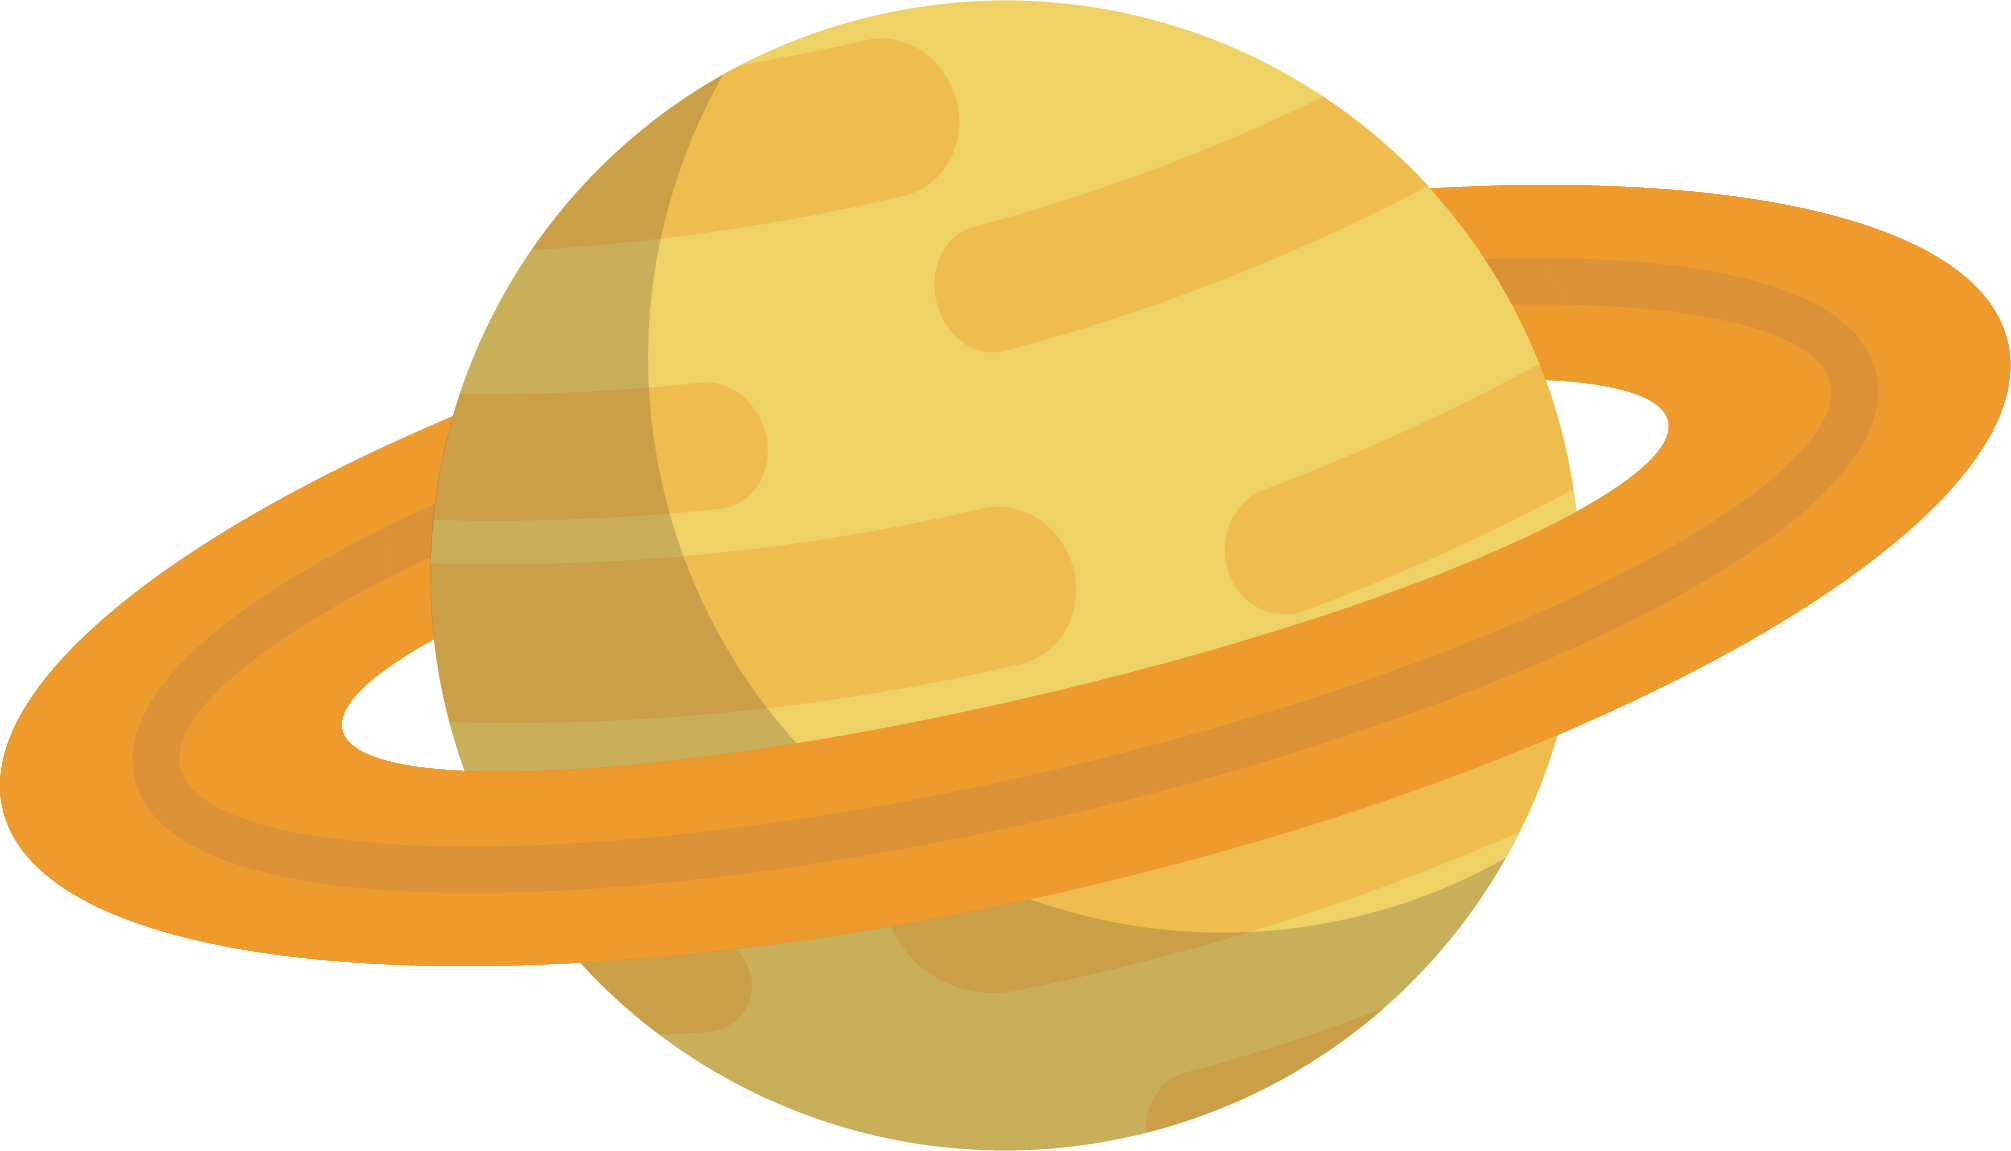 Планета картинка мультяшная. Планеты мультяшные. Планеты на белом фоне. Планета вектор. Сатурн Планета yt ,TKJV ajyt.